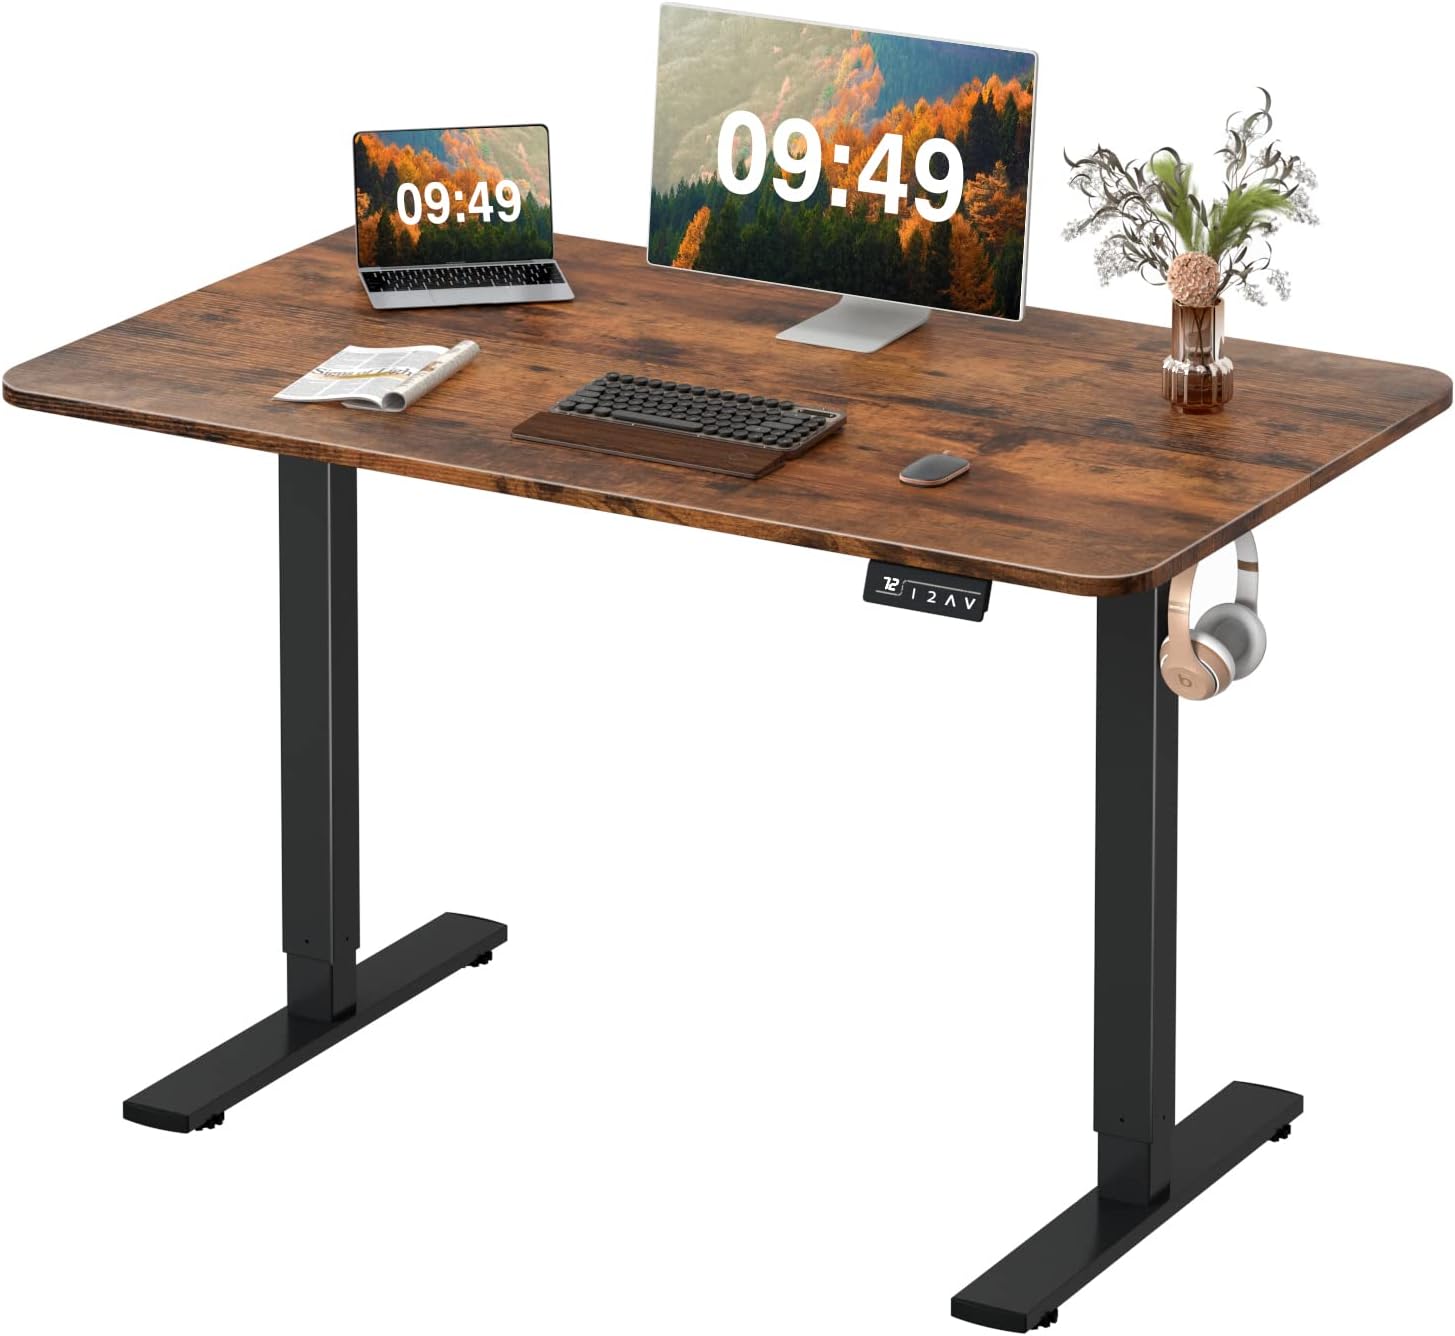 Affordable Height Adjustable Table – Electric Single Motor (Work From Home Series) rising desk black color frame brown table top solid wood ergologic standup desk